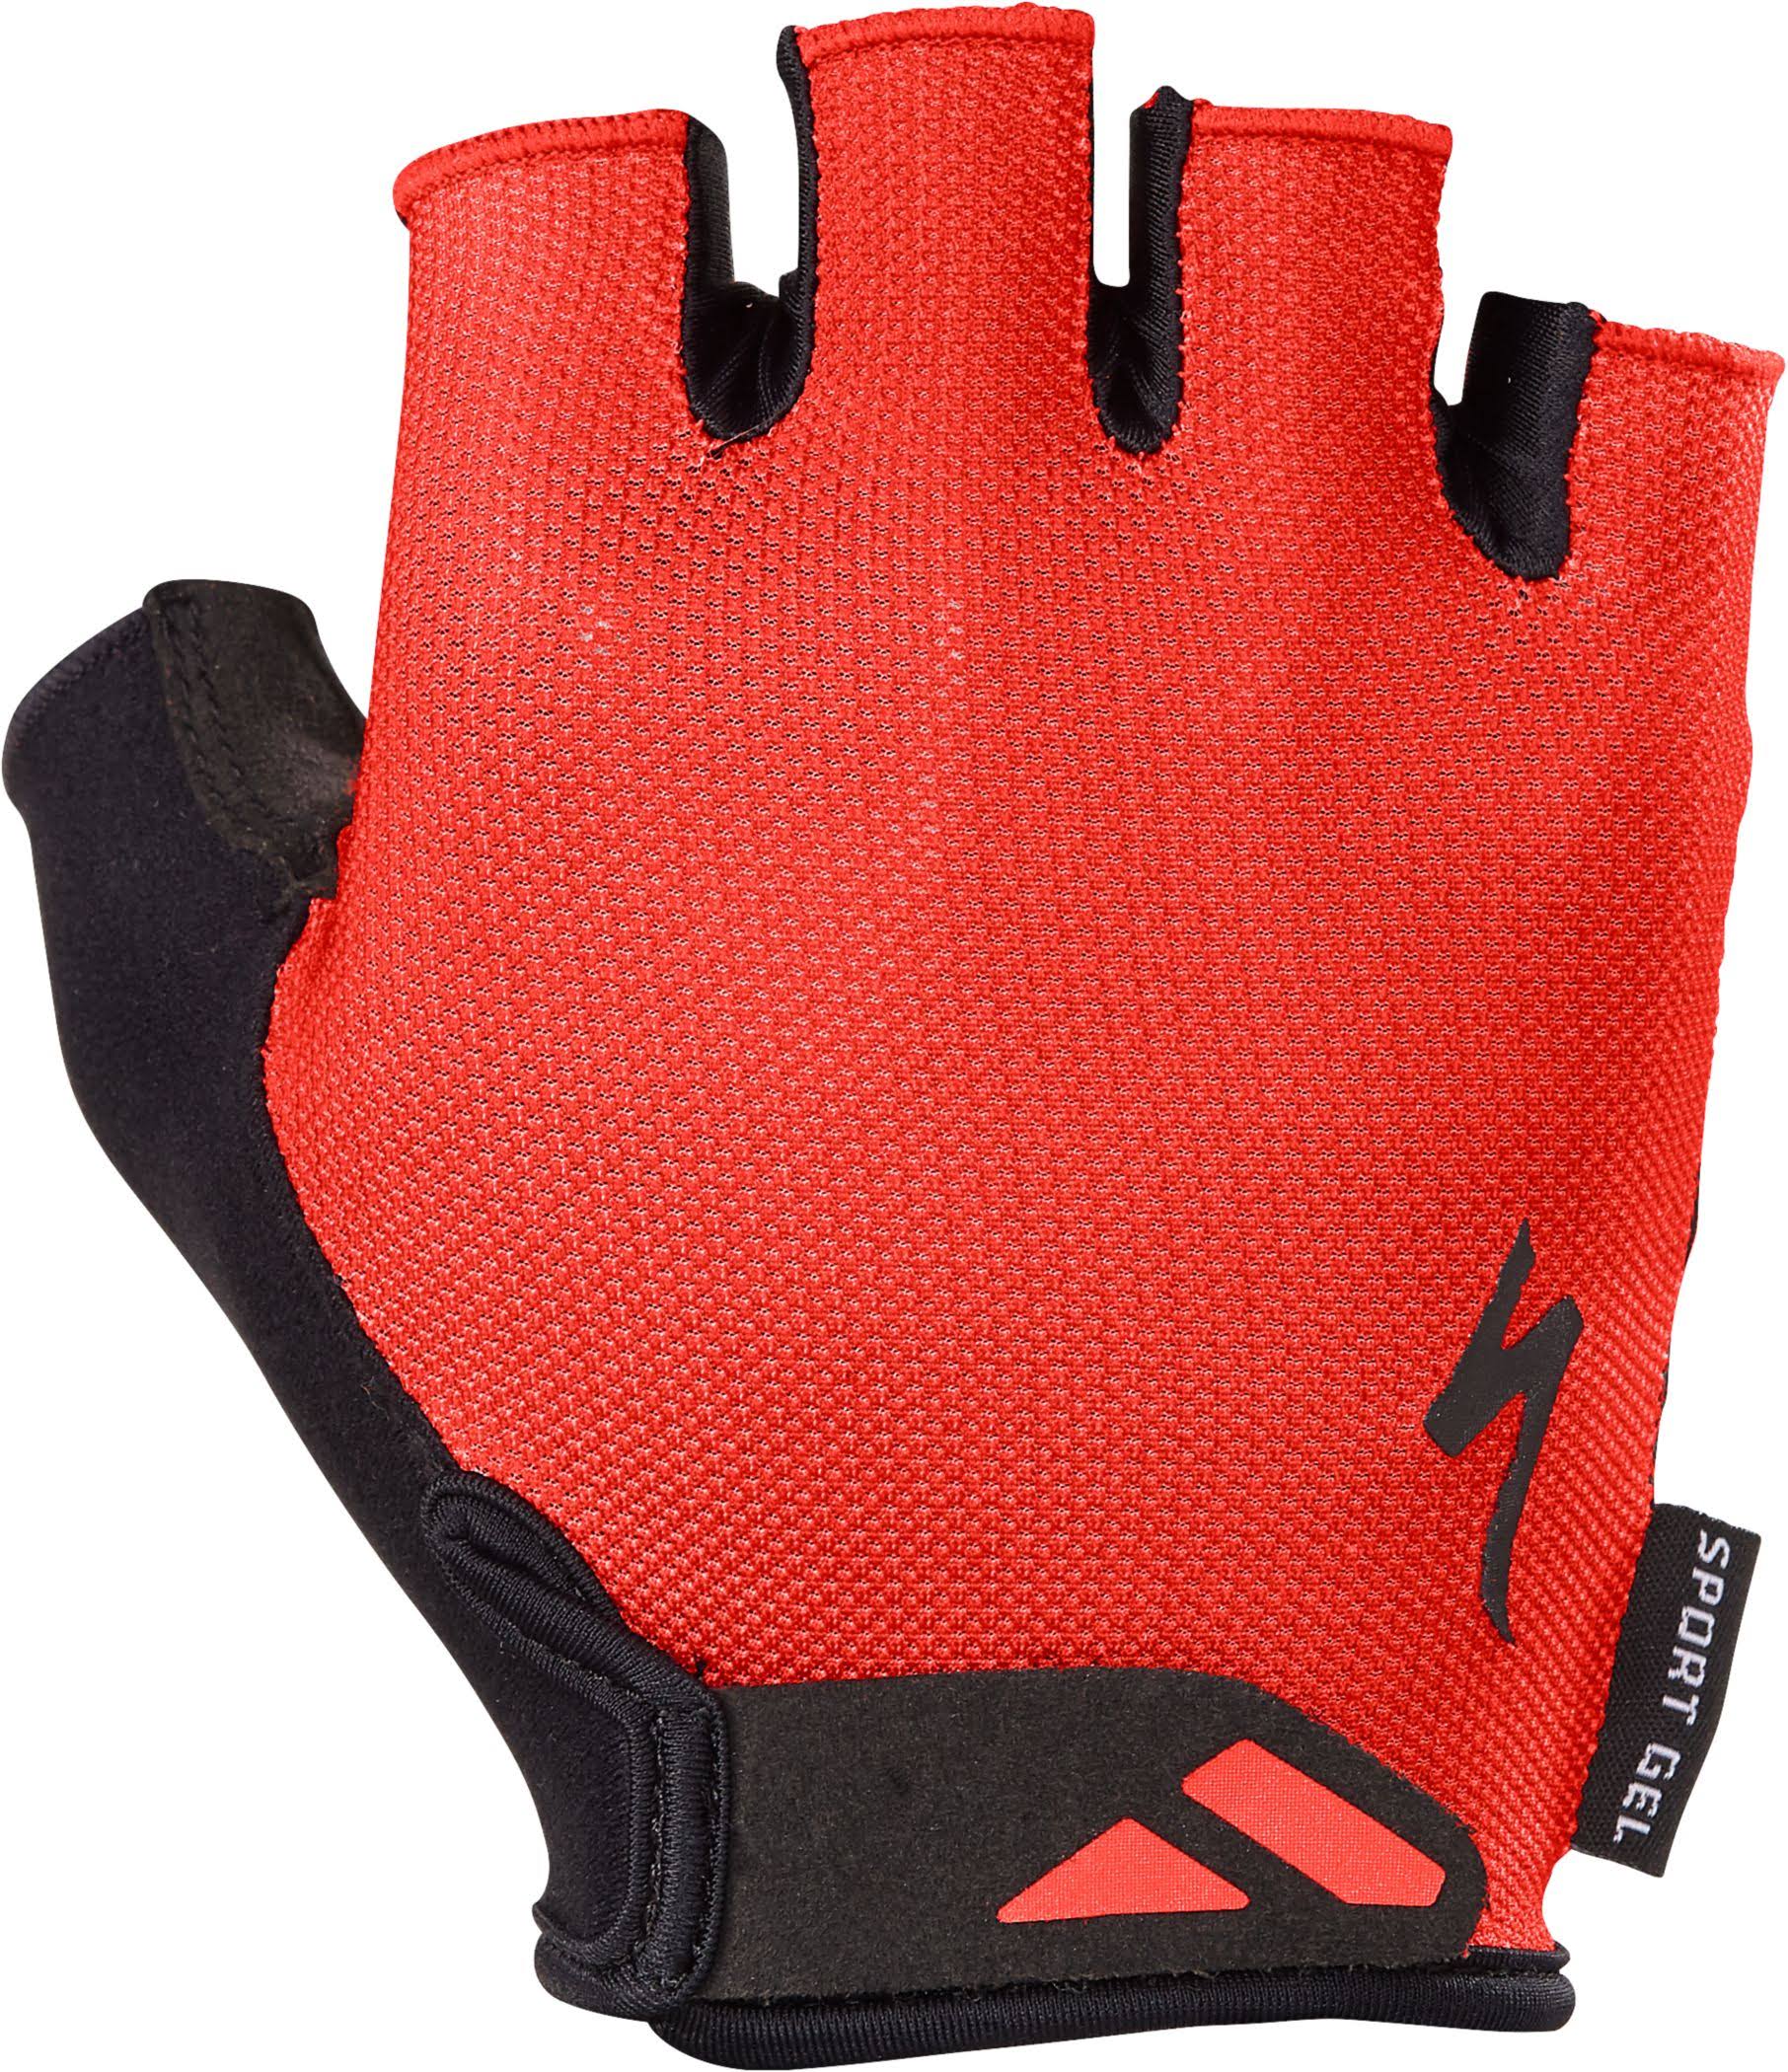 Specialized Body Geometry Sport Gel Gloves Red